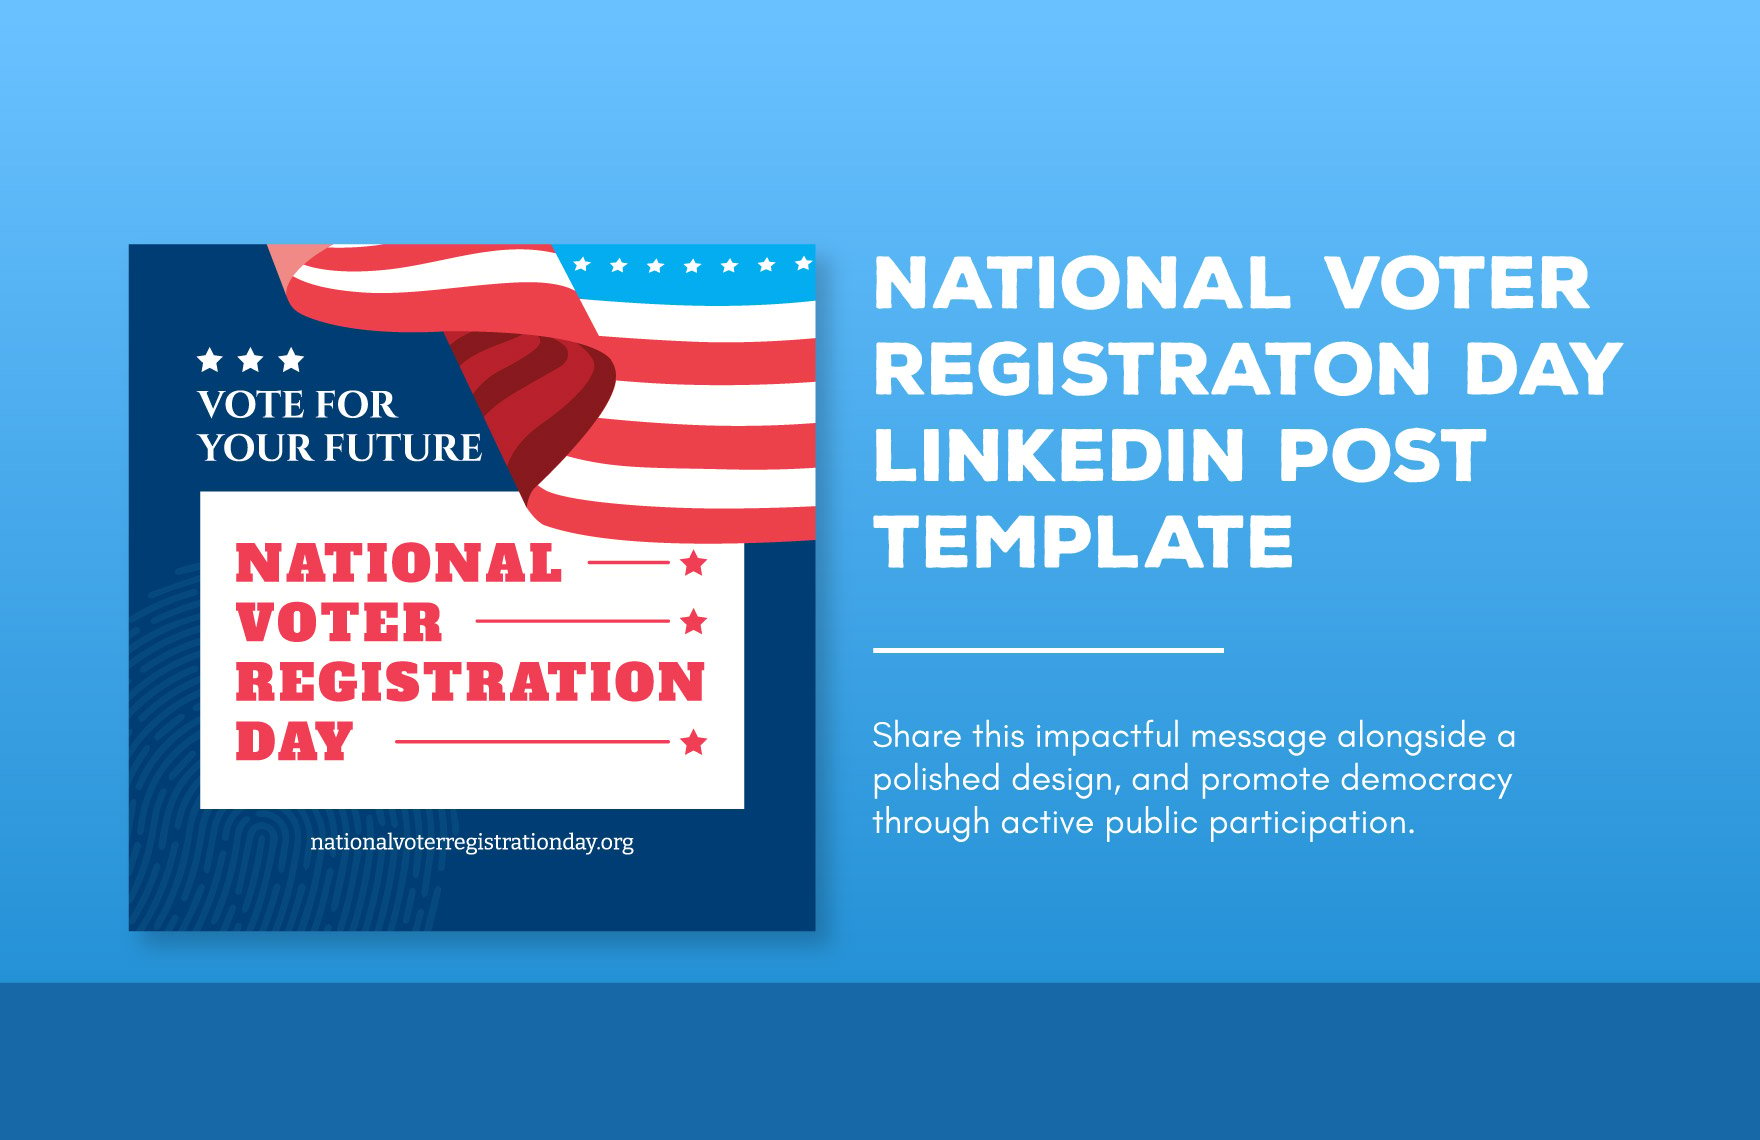 Free National Voter Registration Day LinkedIn Post Template in Illustrator, PSD, PNG